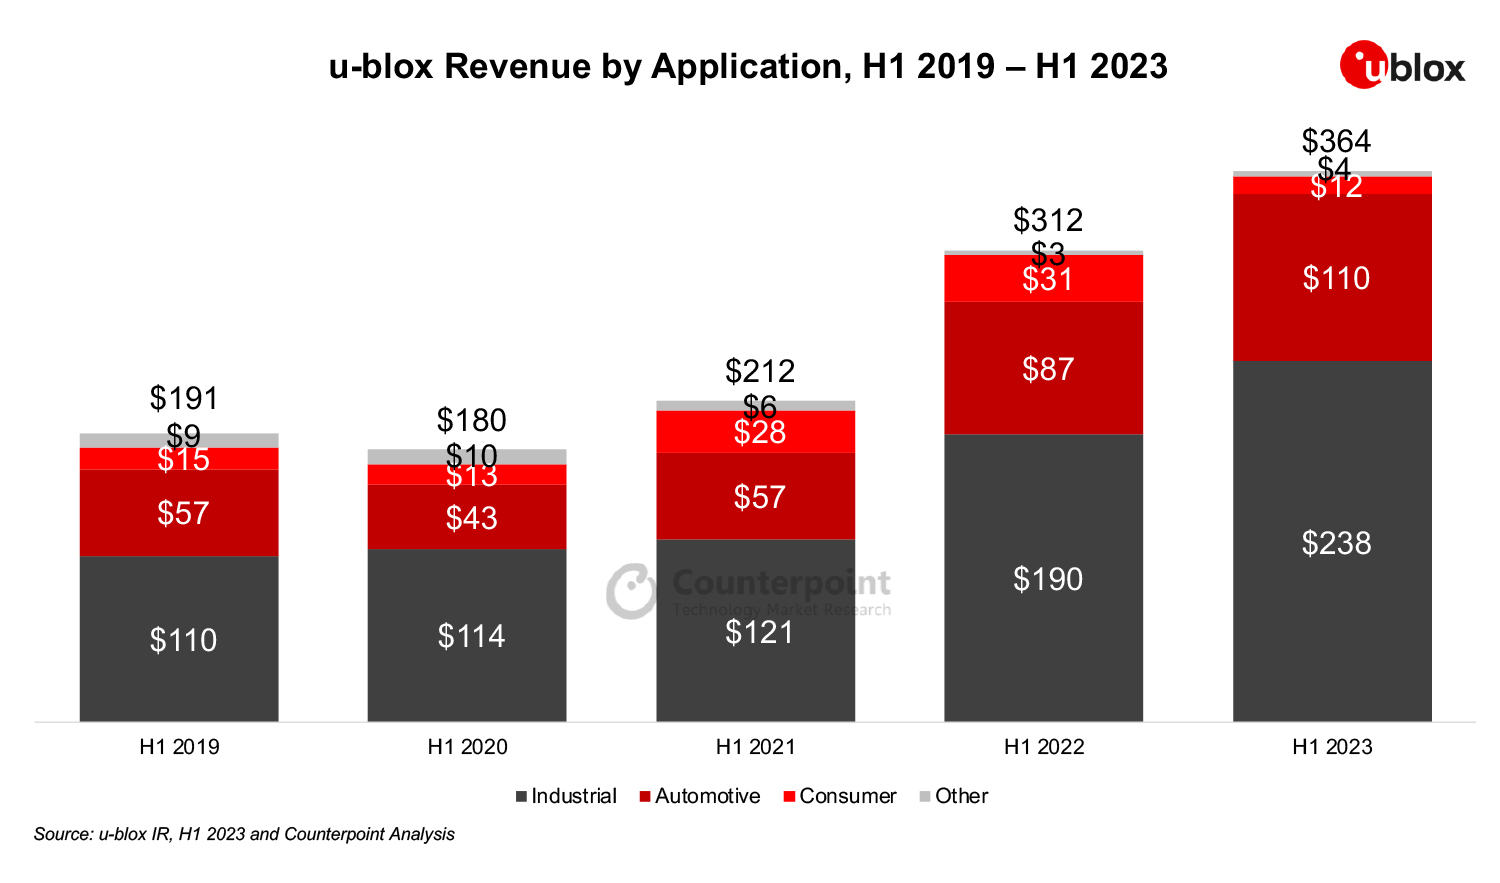 u-blox revenue by application, H1 2019 - H1 2023